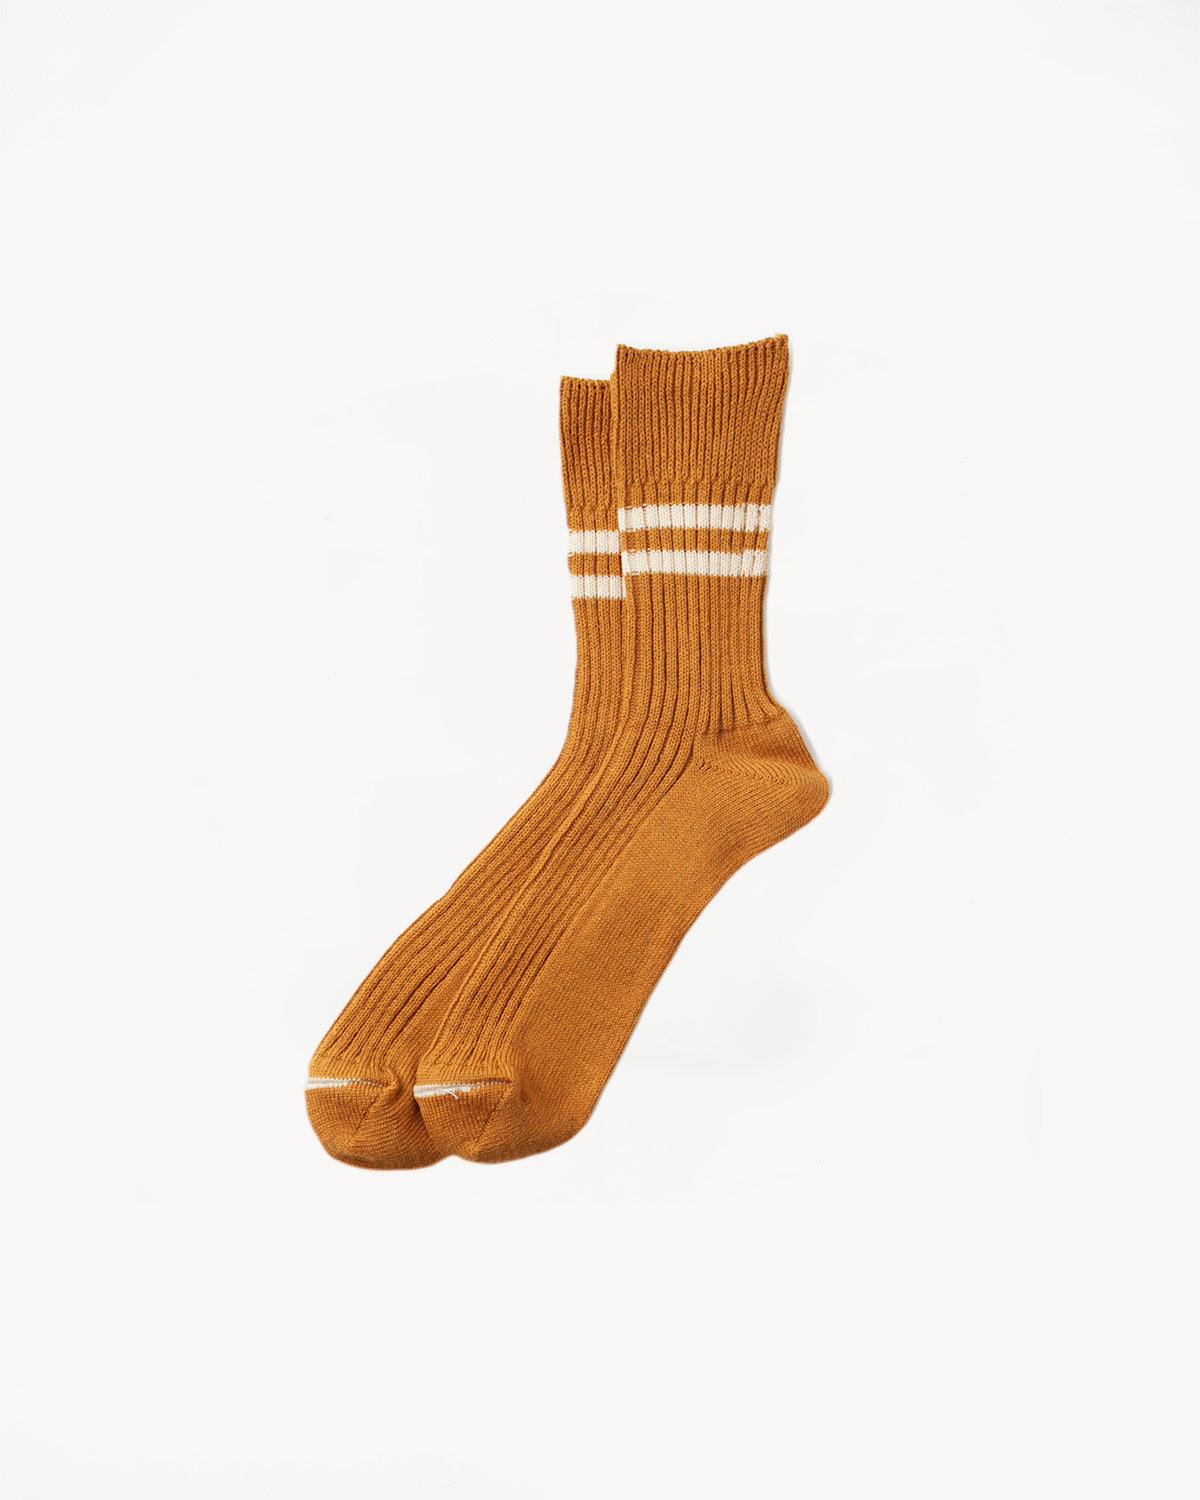 Organic cotton striped socks